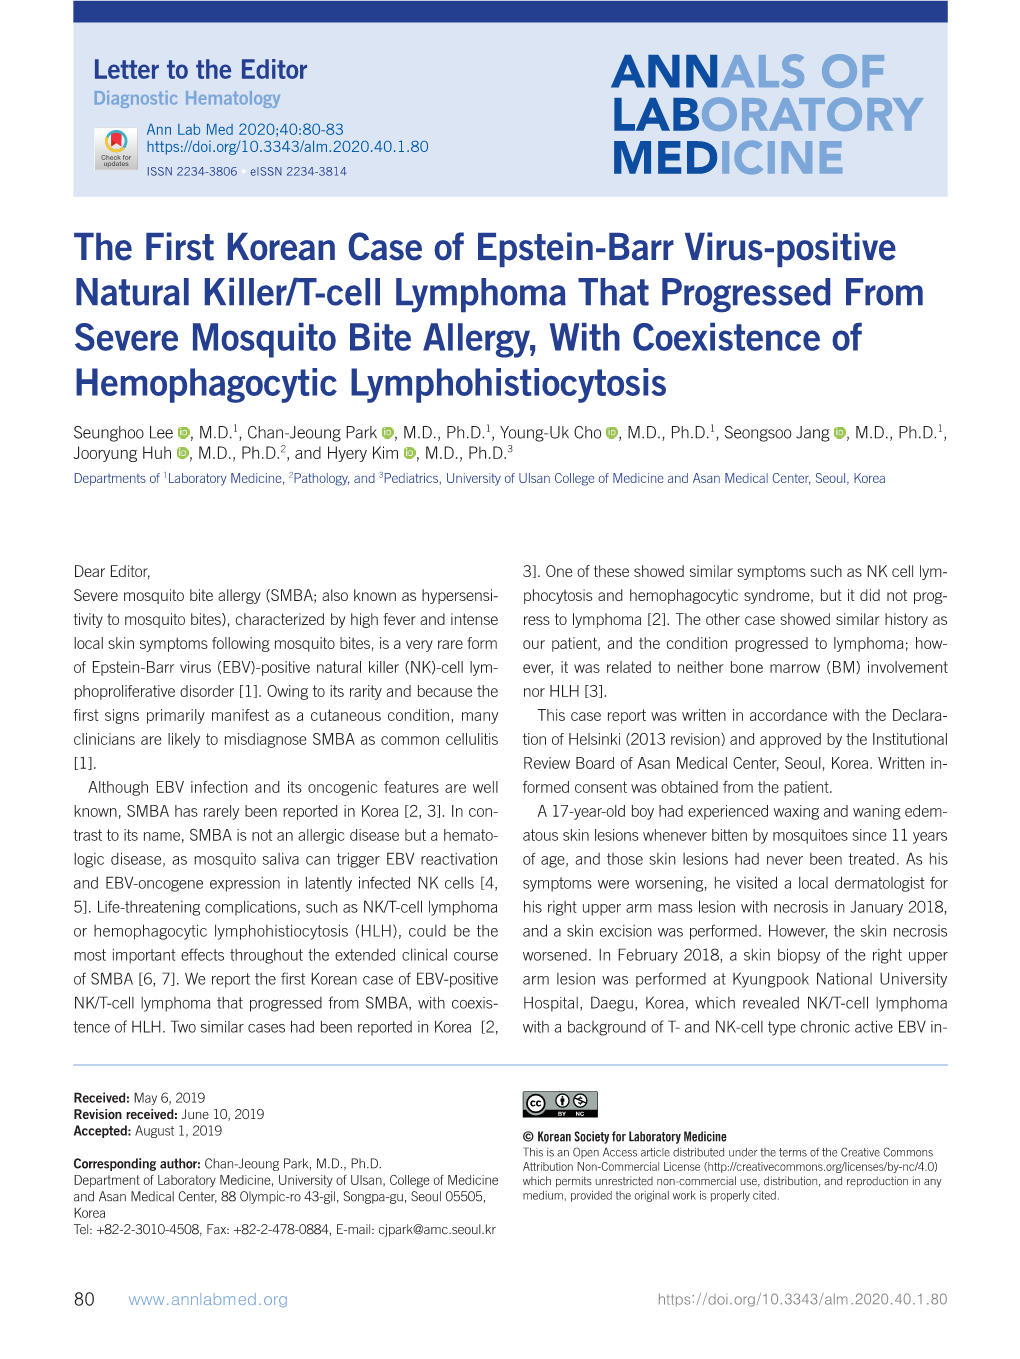 The First Korean Case of Epstein-Barr Virus-Positive Natural Killer/T-Cell